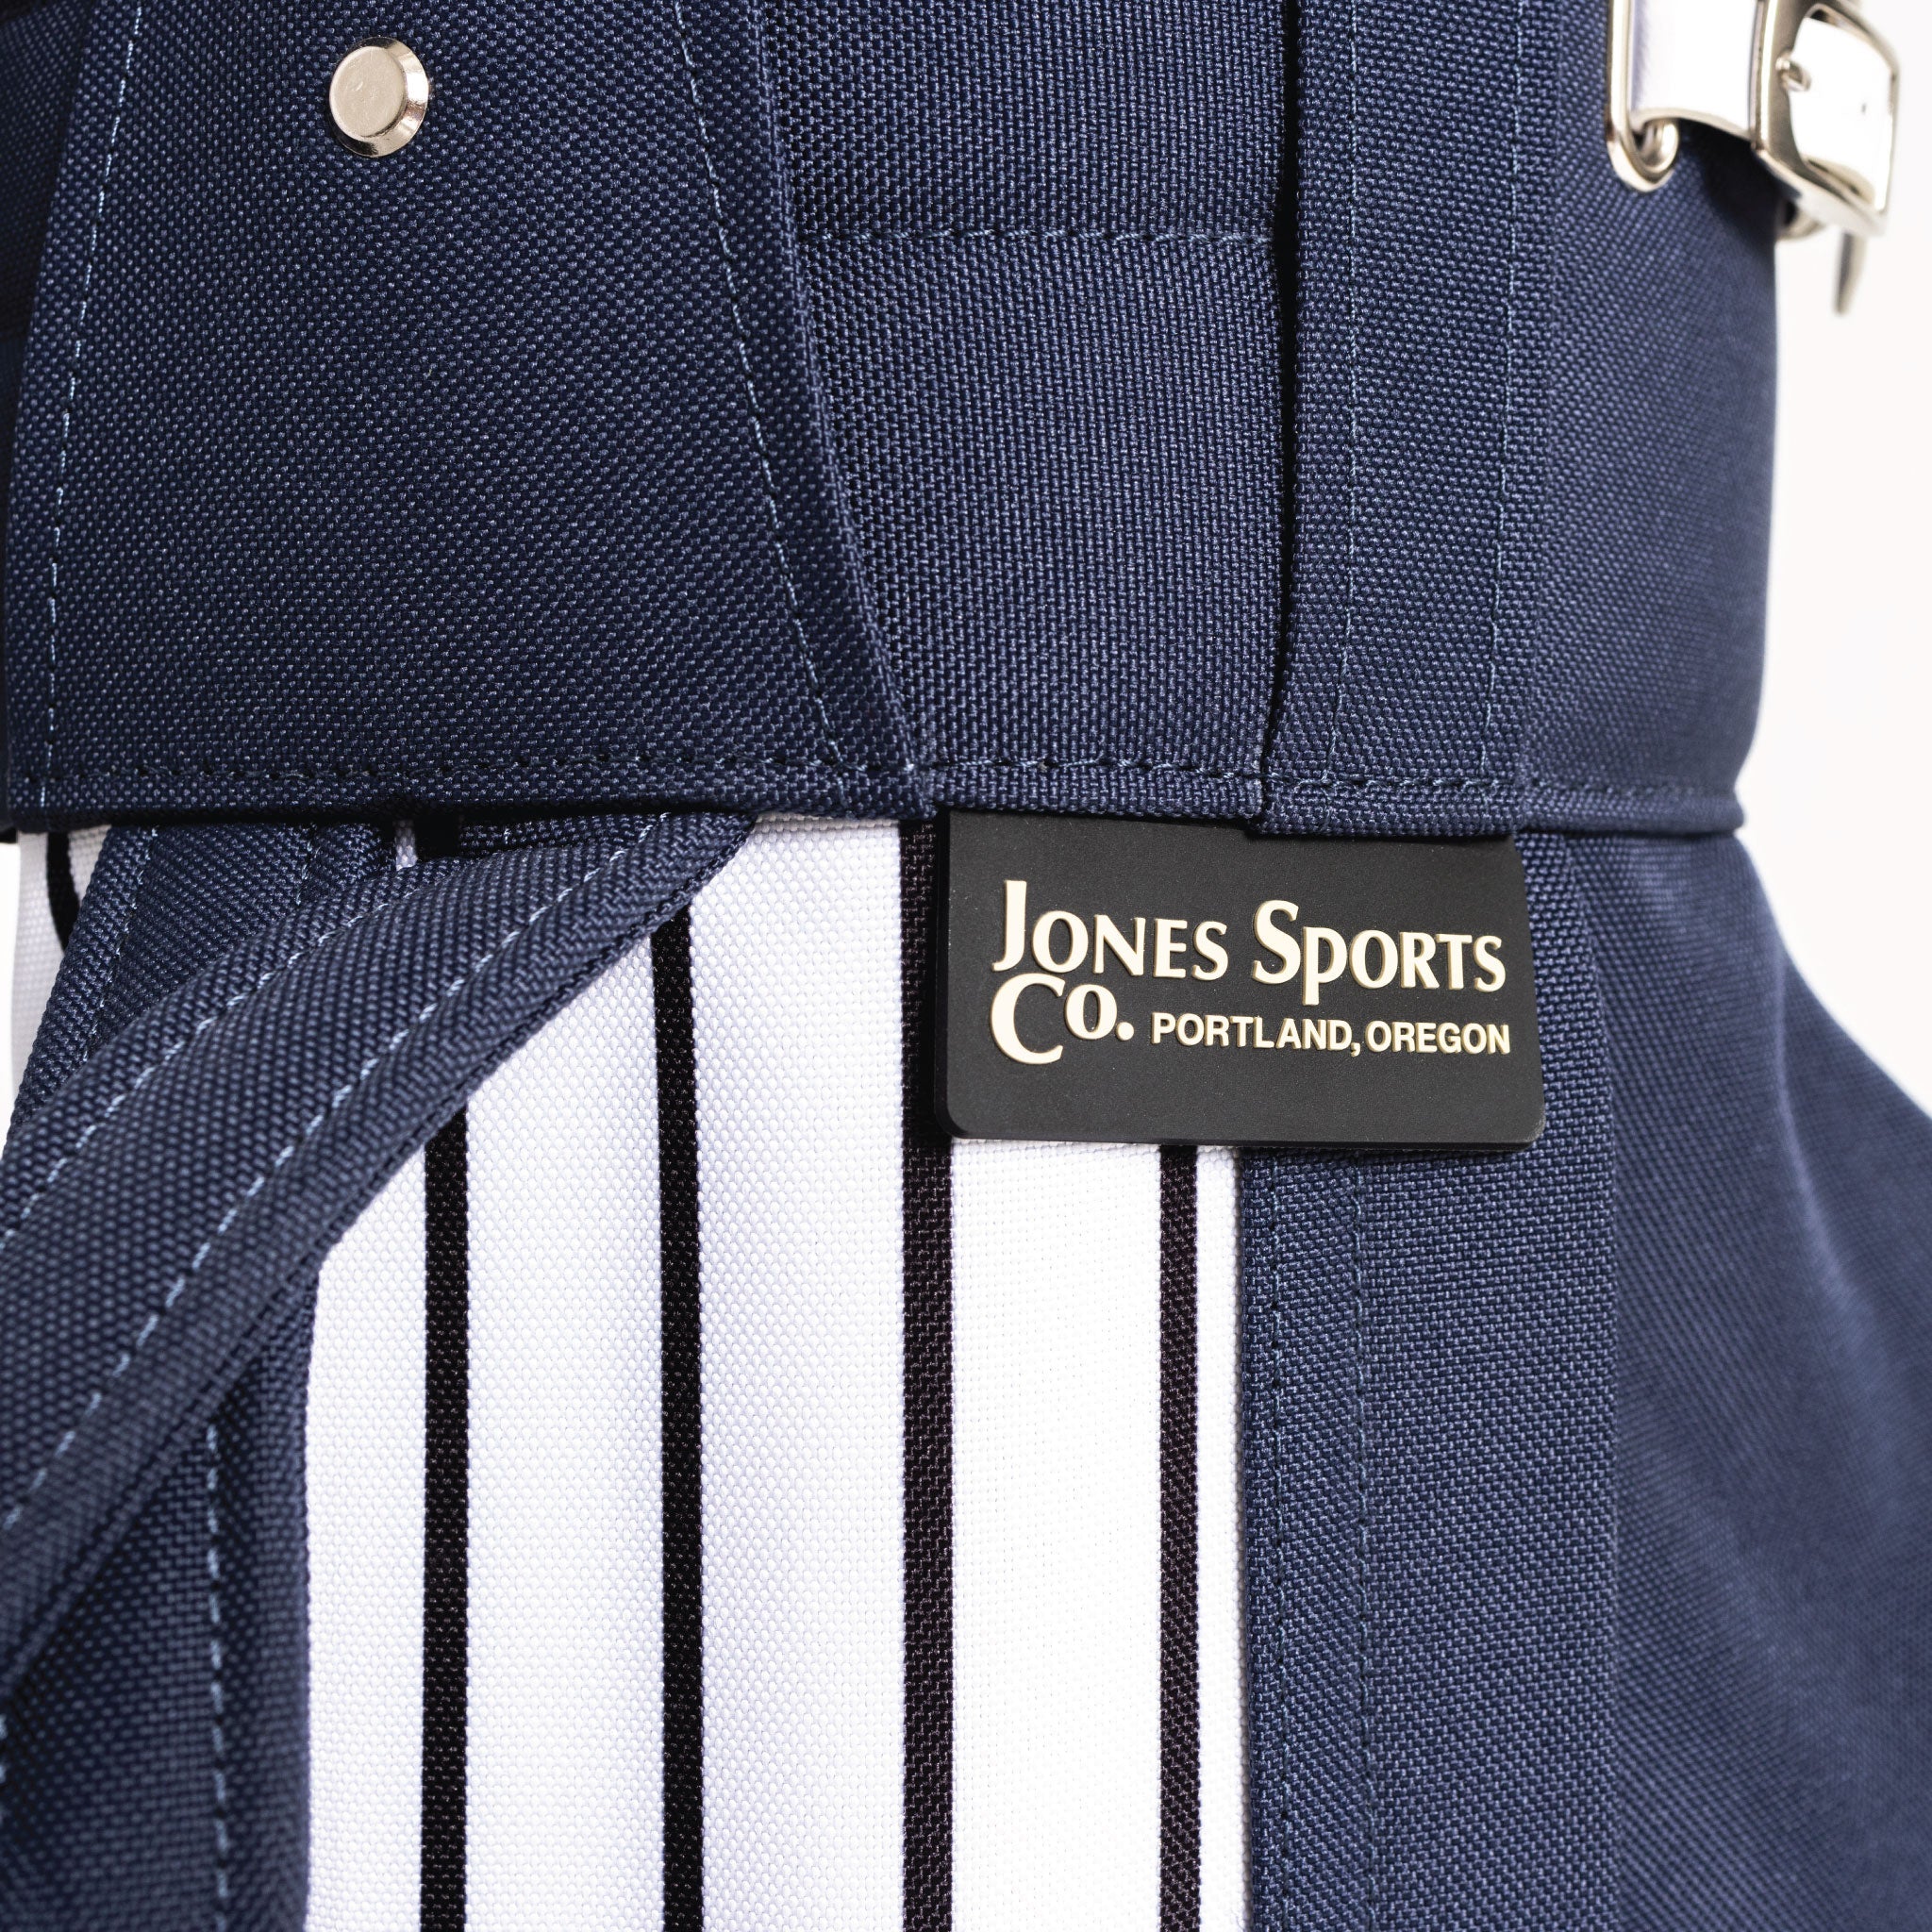 Jones Sports Co Classic Stand Bag - Navy Pinstripe